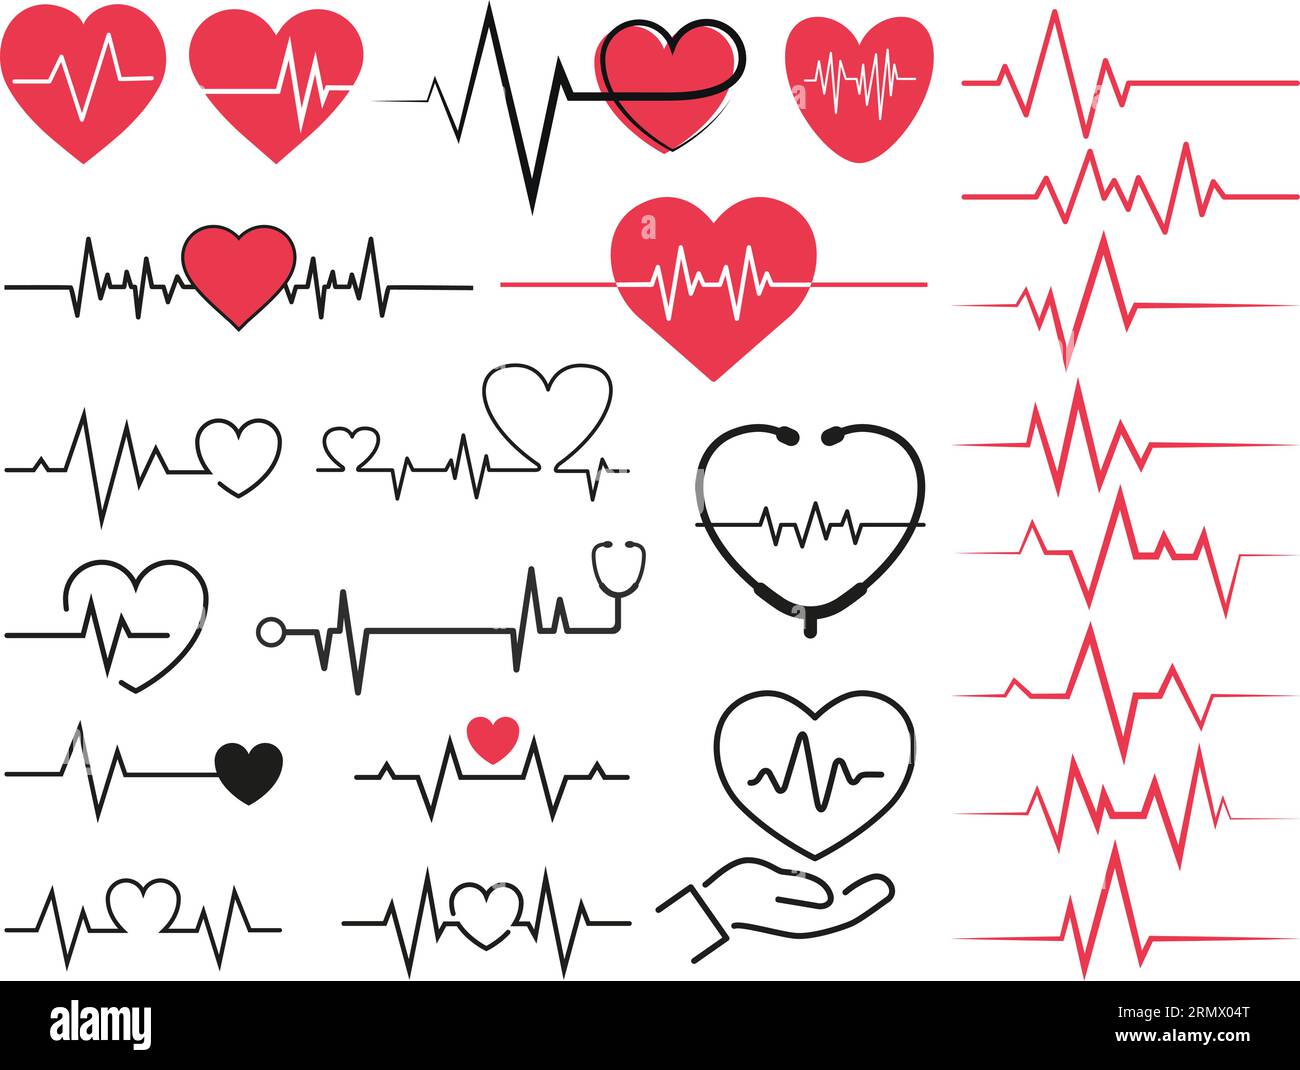 Heartbeat Healthy Line ECG Vetor Stock Vector